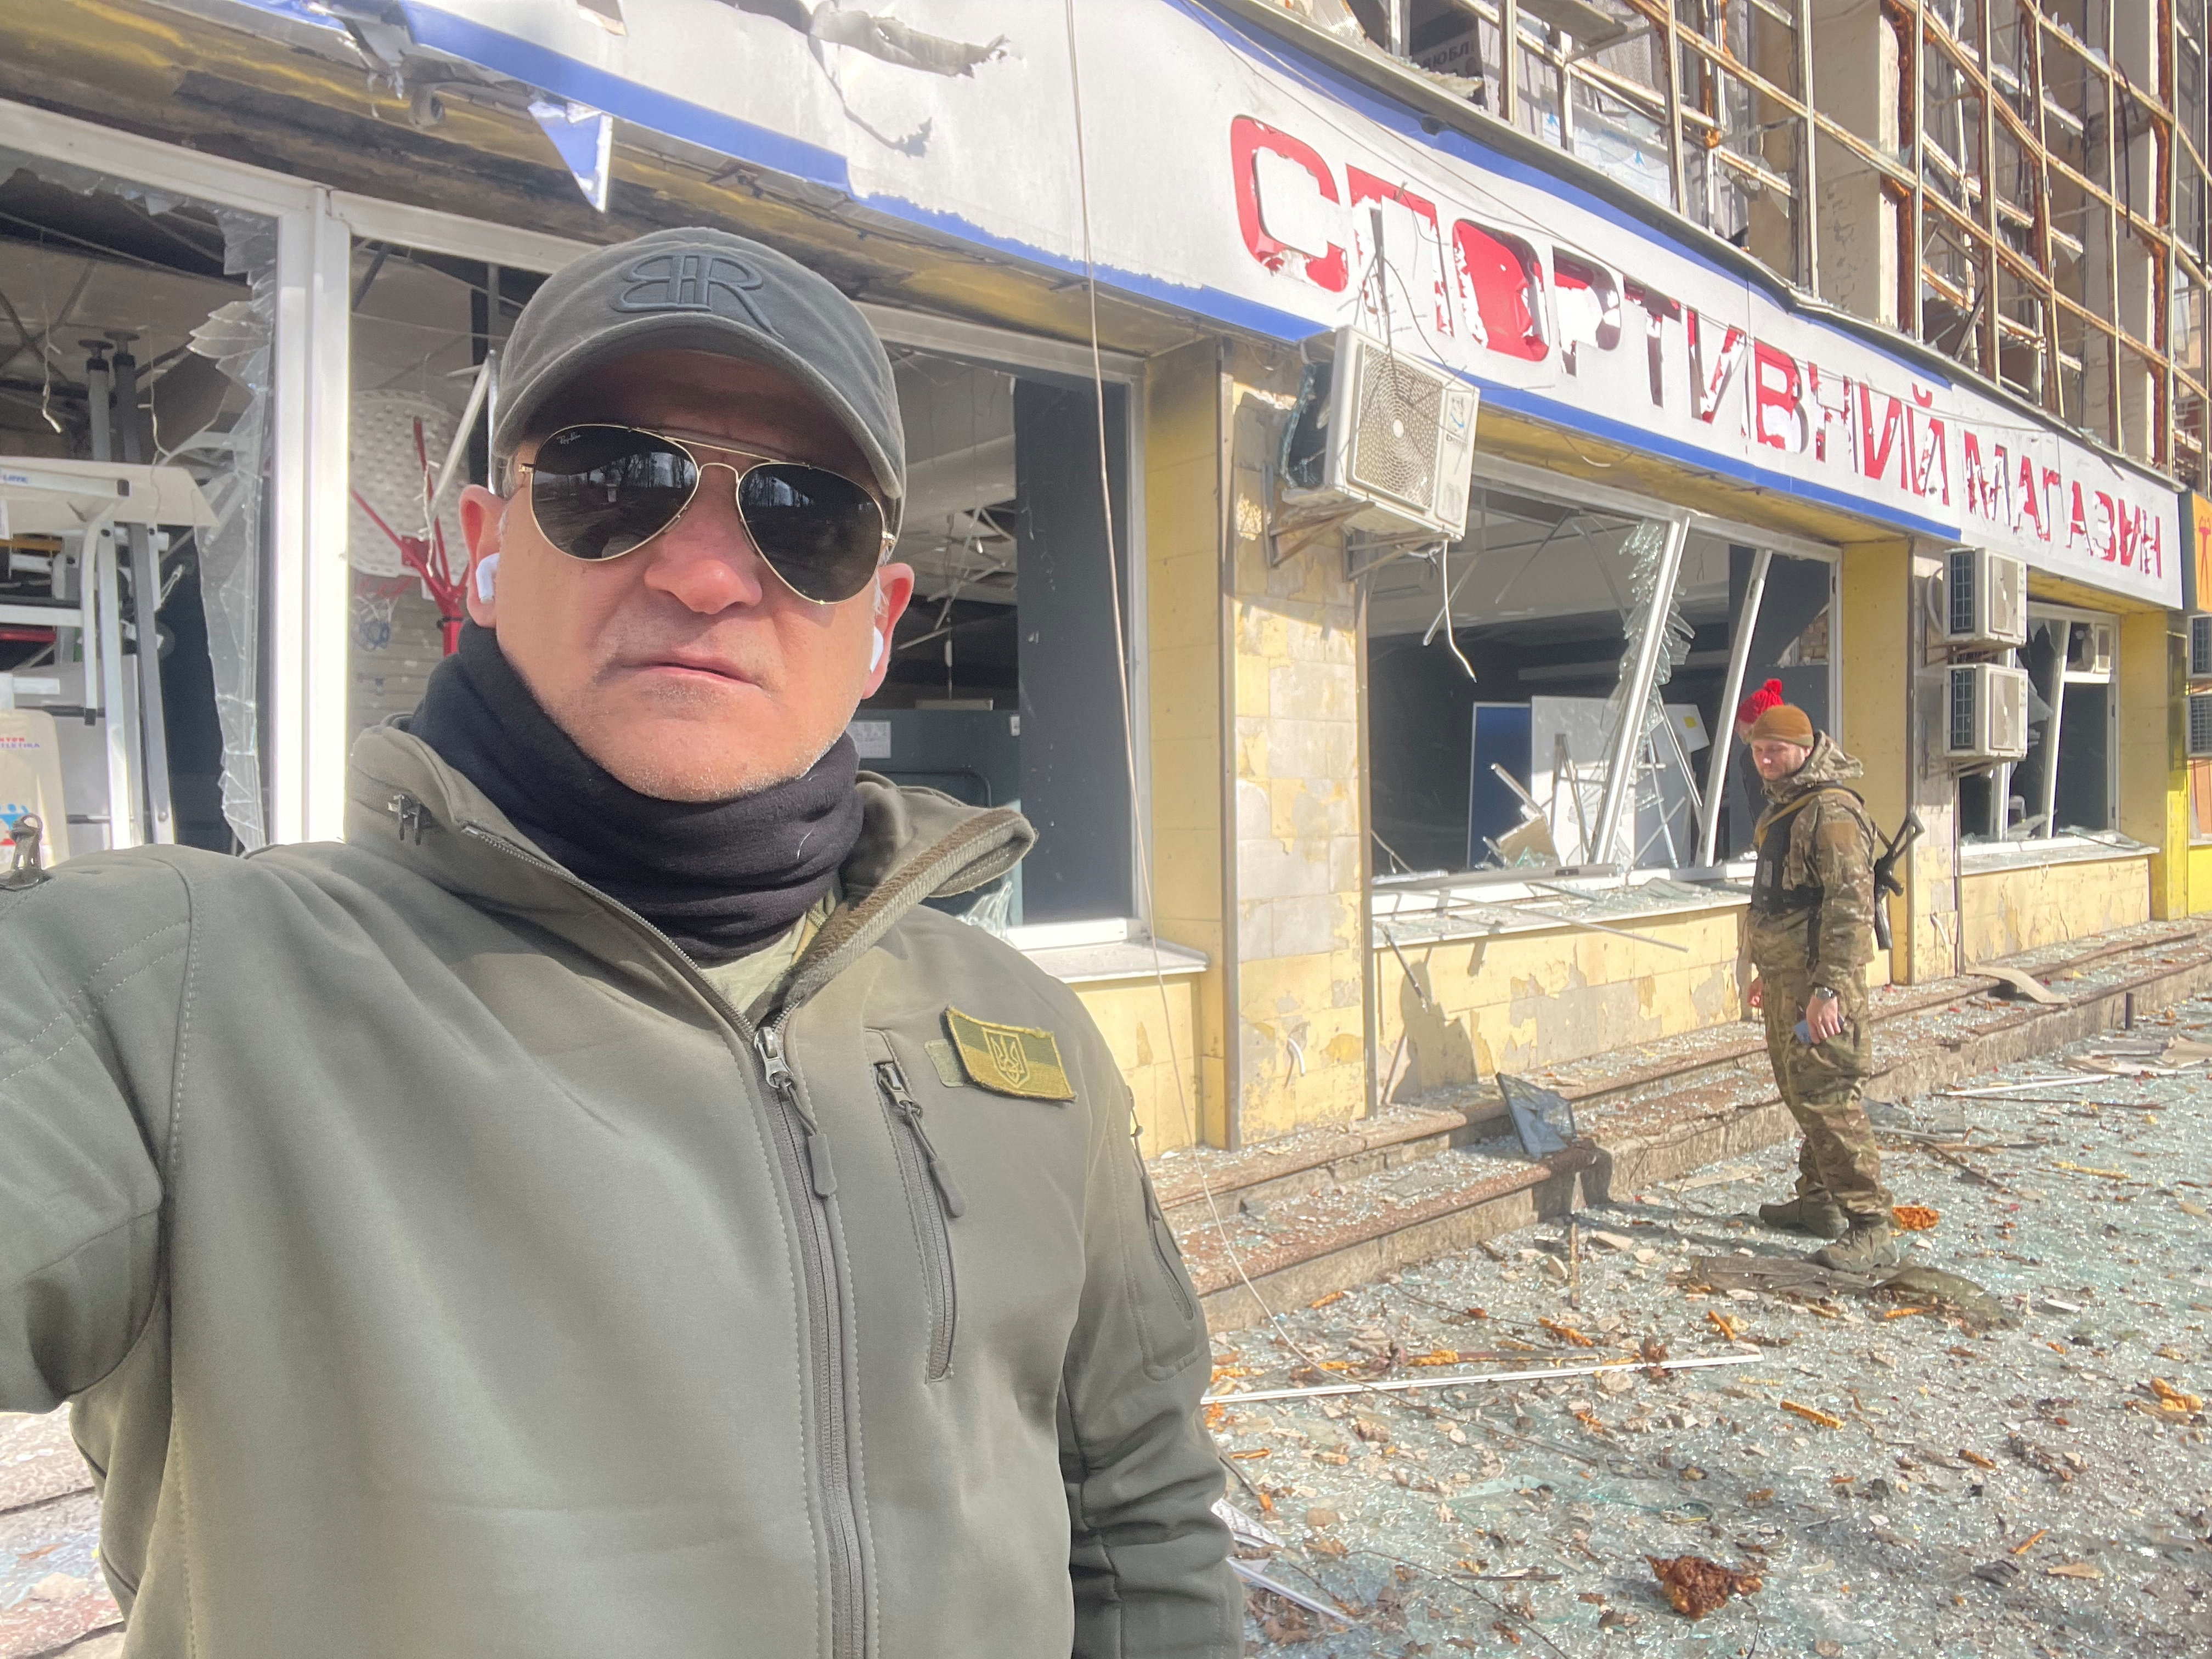 Iraqi-American Kurd Ballack takes selfie near TV tower that was hit in attacks in Kyiv